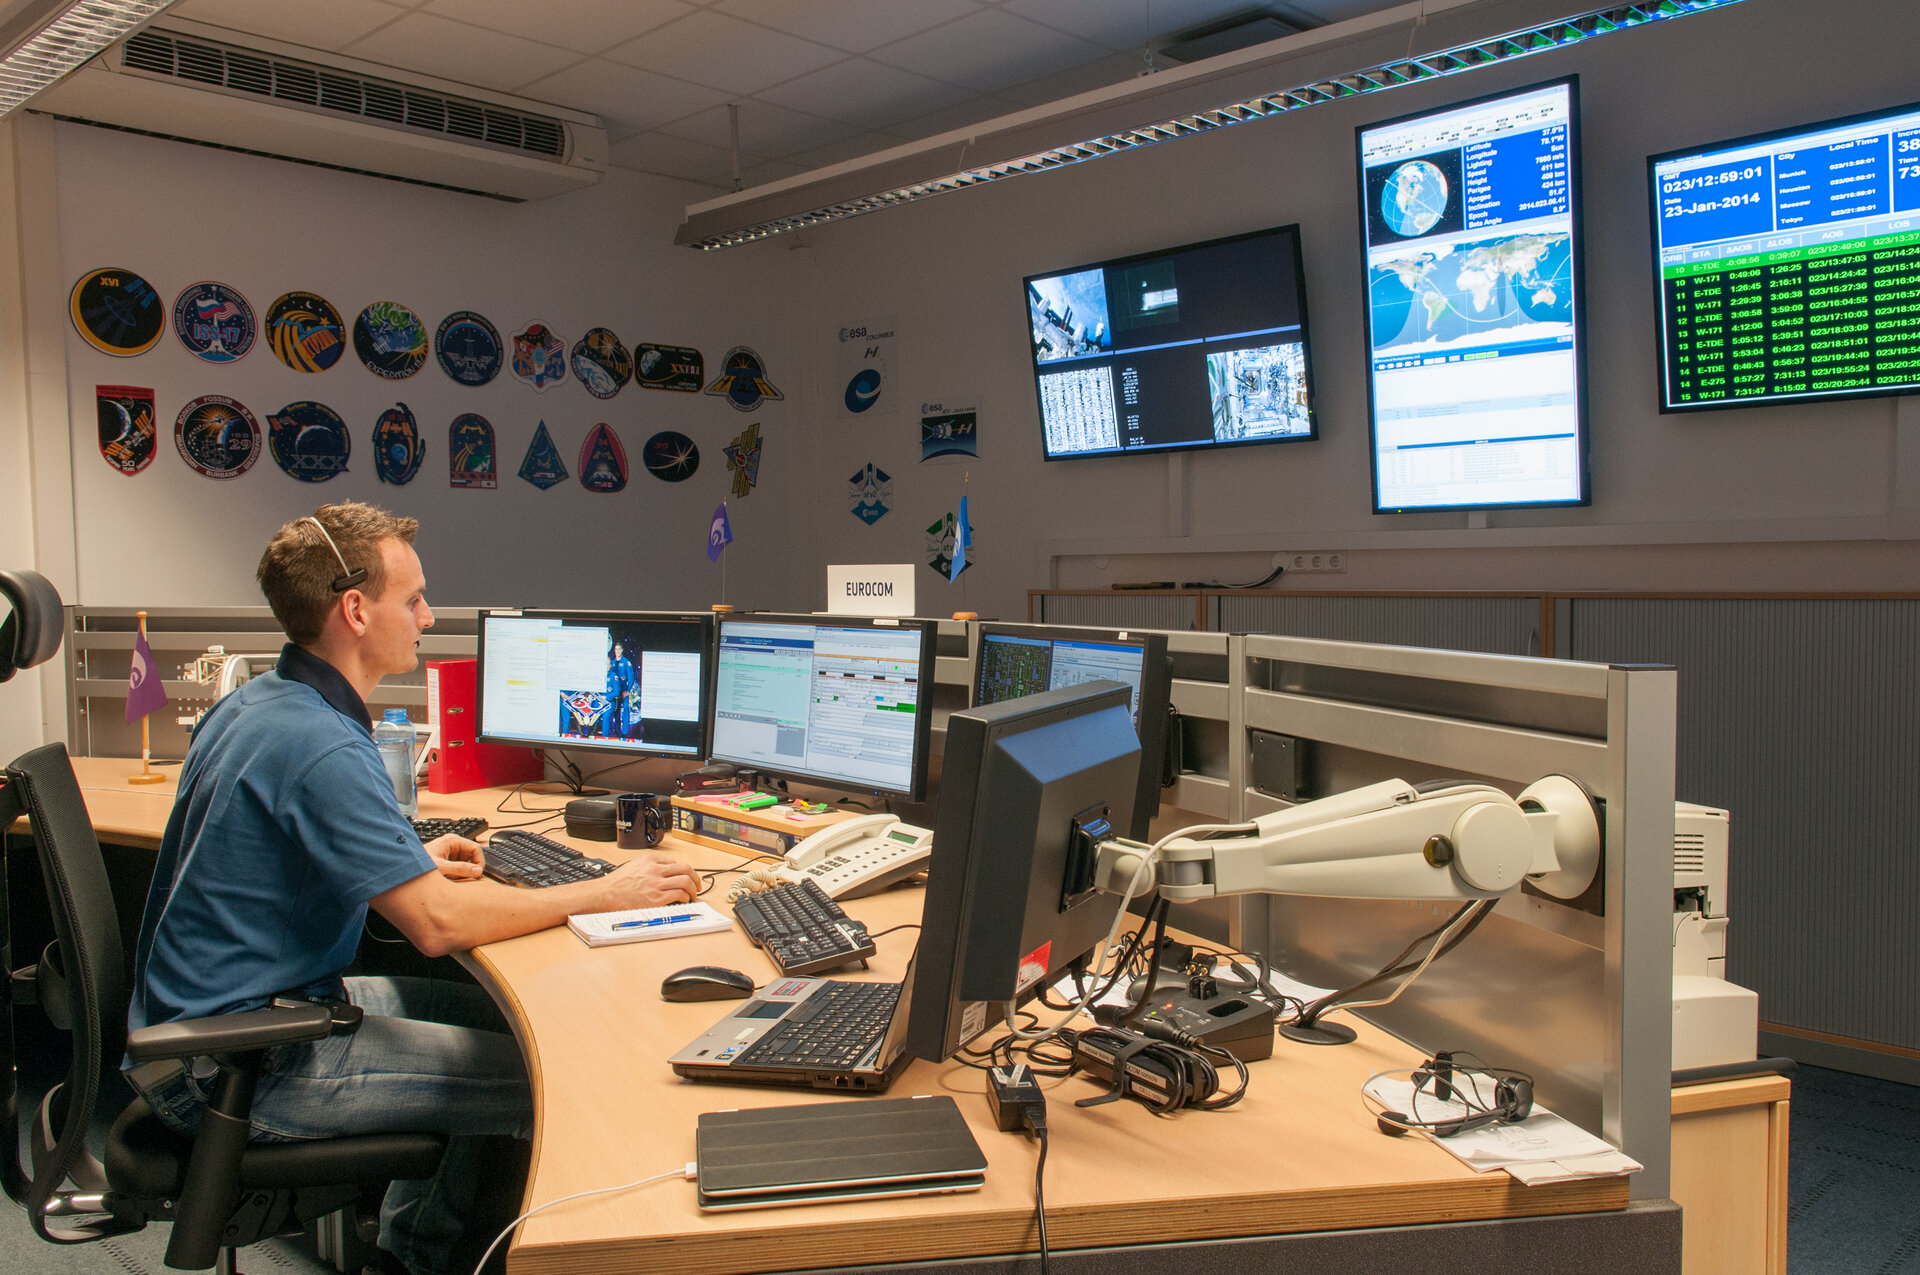 EUROCOM relaying feedback from the Columbus Flight Control Team